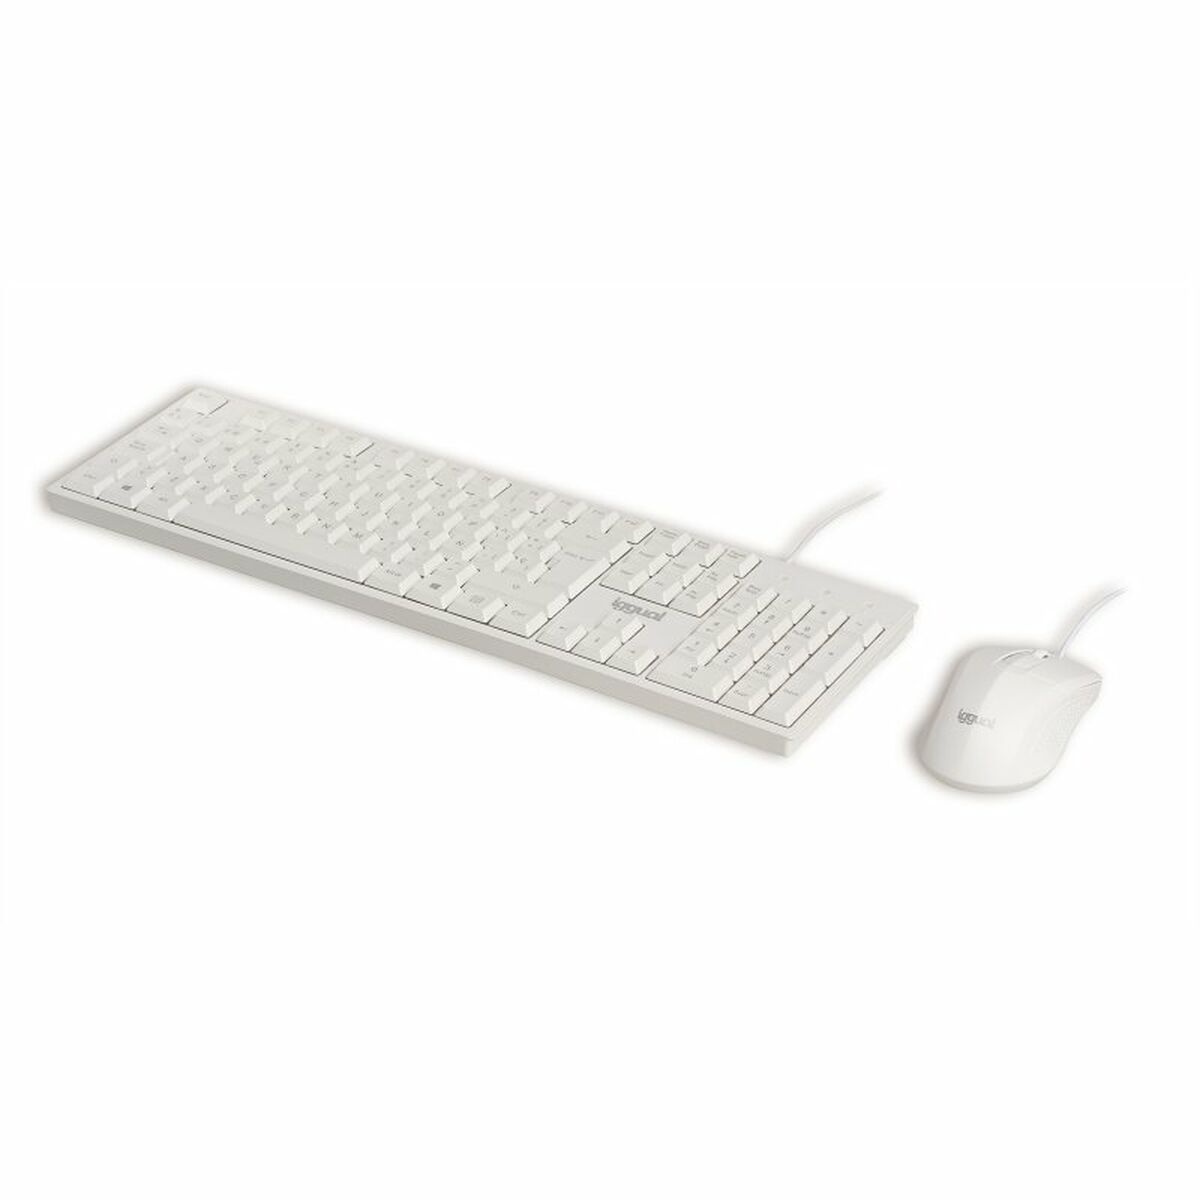 Tastatur mit Maus iggual CMK-BUSINESS - CA International  